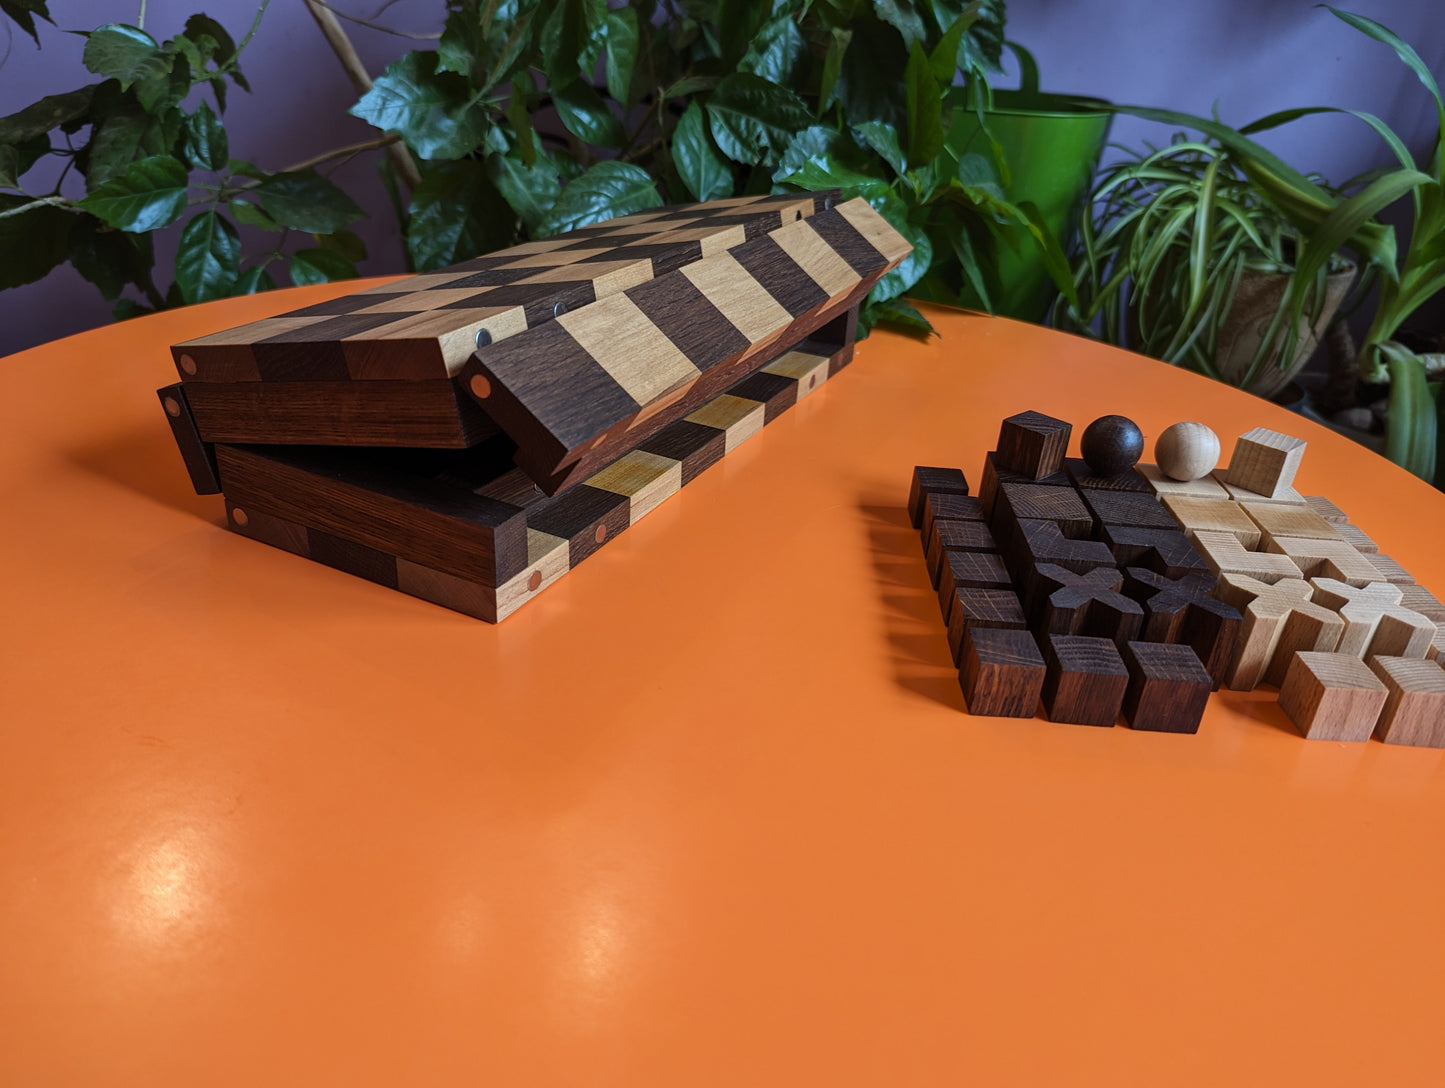 Portable Bauhaus Chess Set with Wooden Chessboard/Chessbox. Handmade.